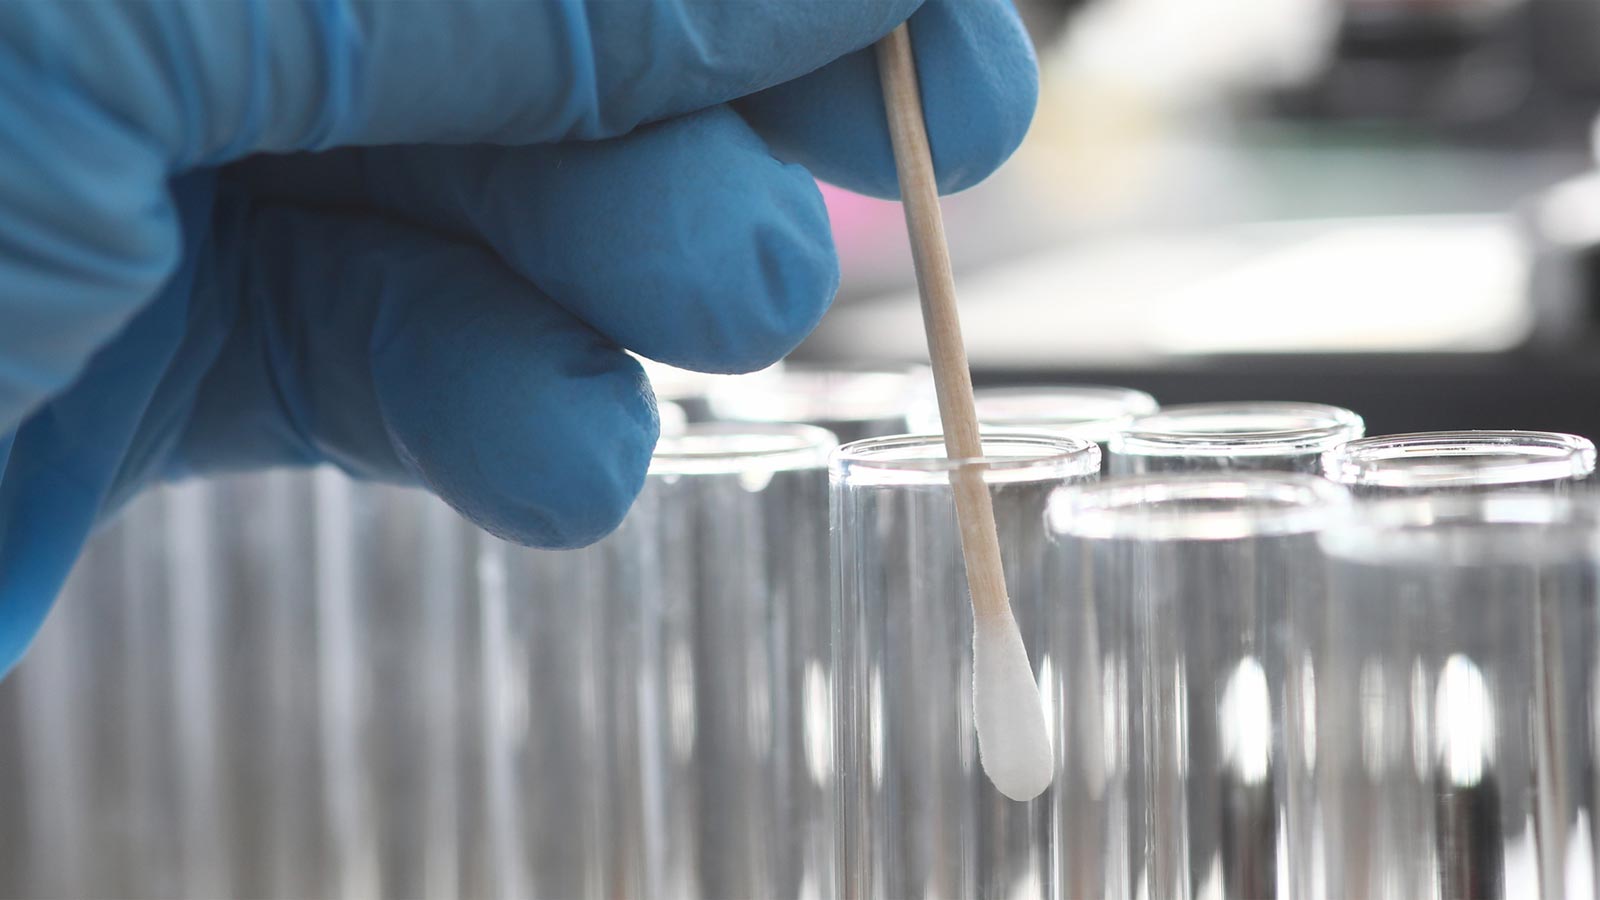 Should I get my DNA tested? We asked five experts